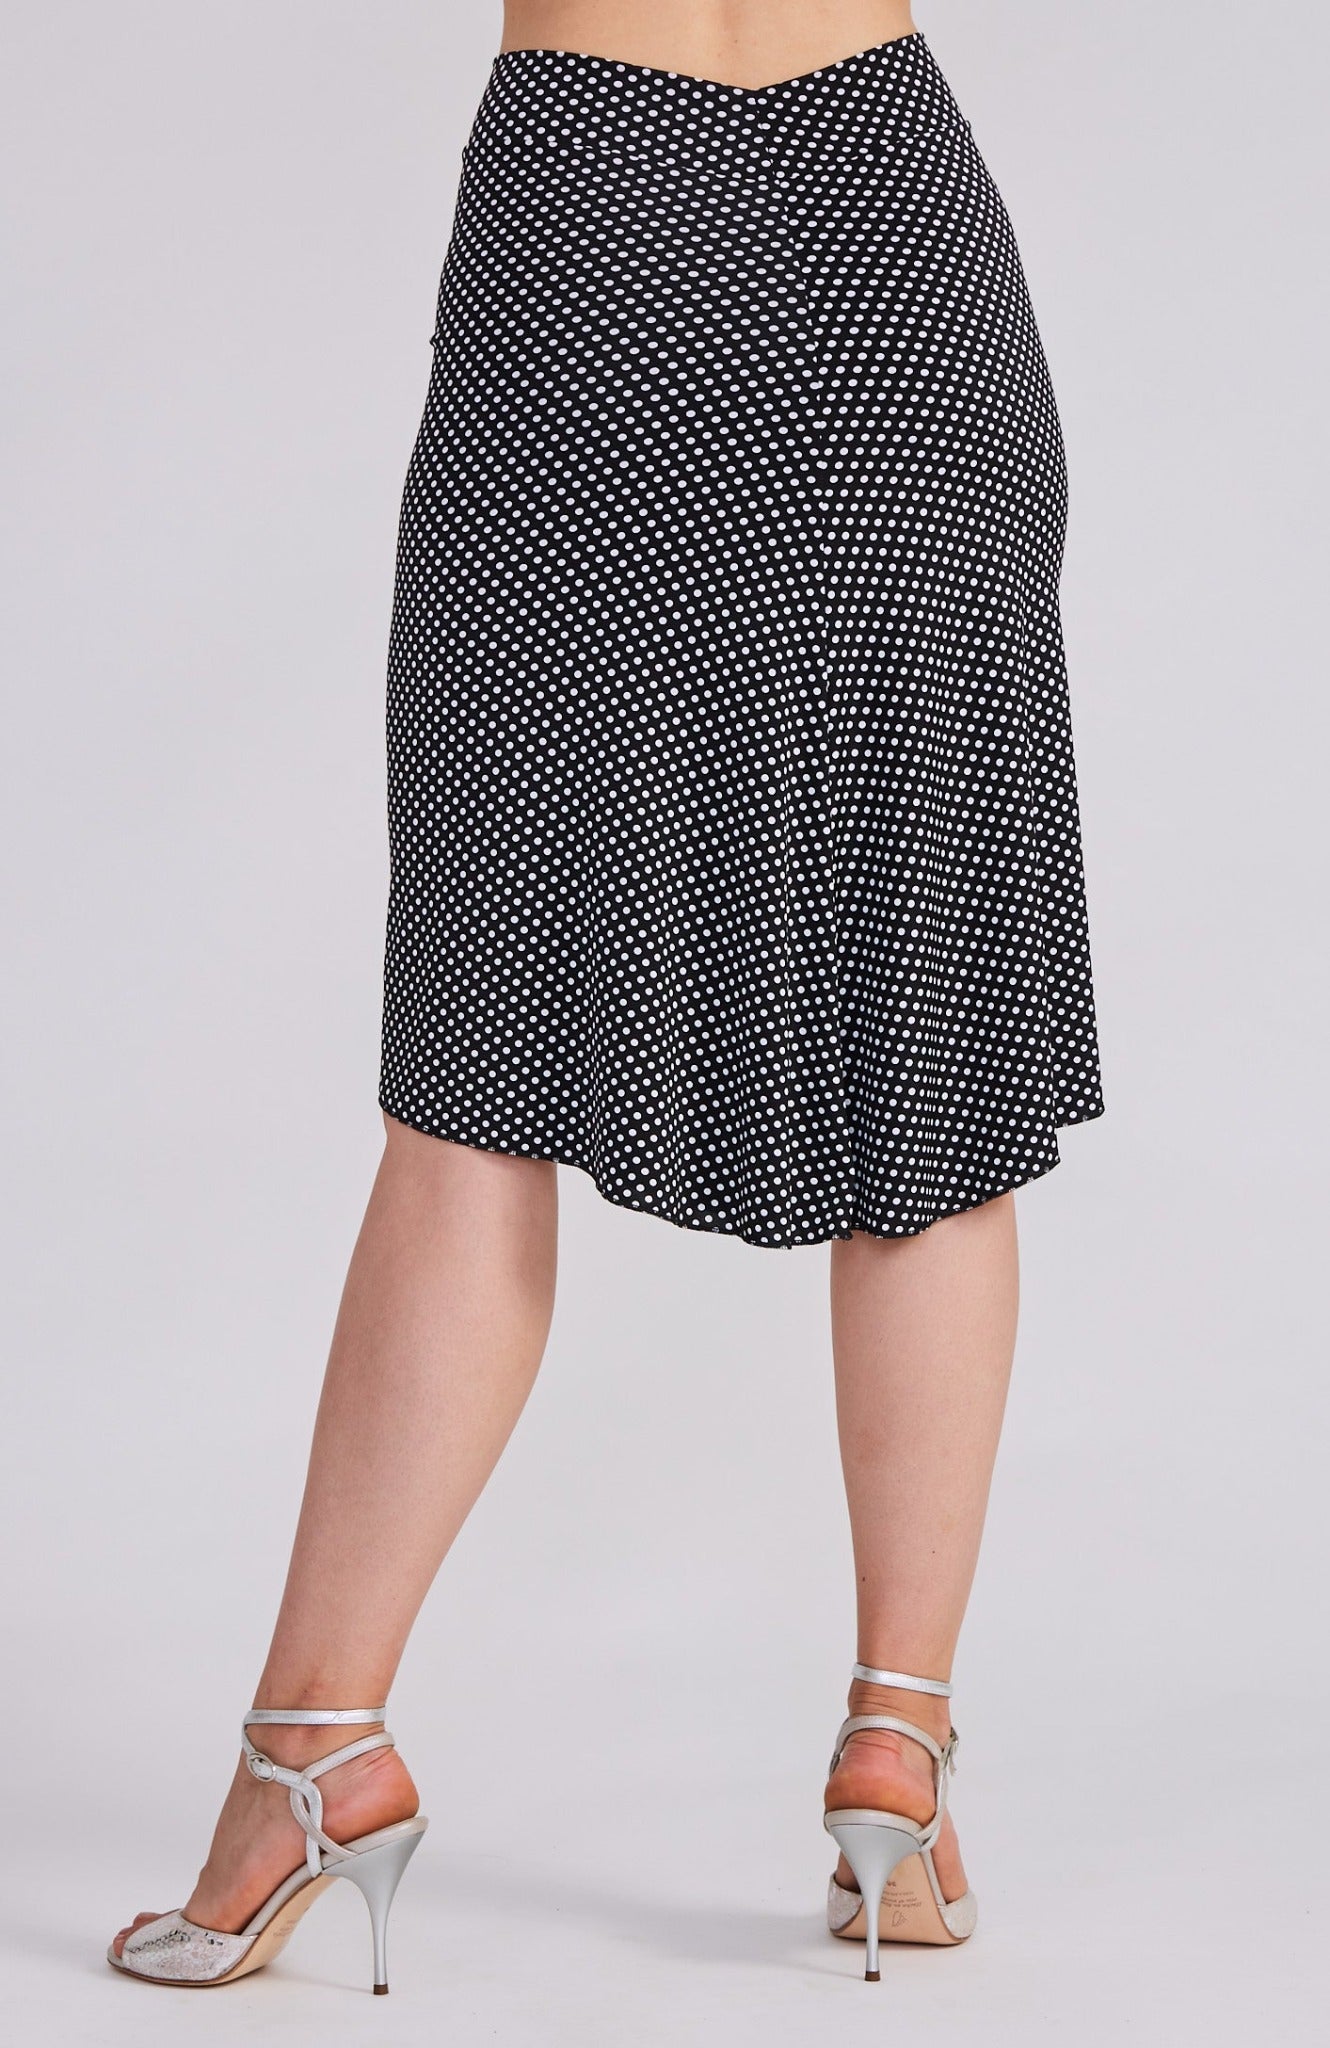 argentine tango skirt in polka dots black white